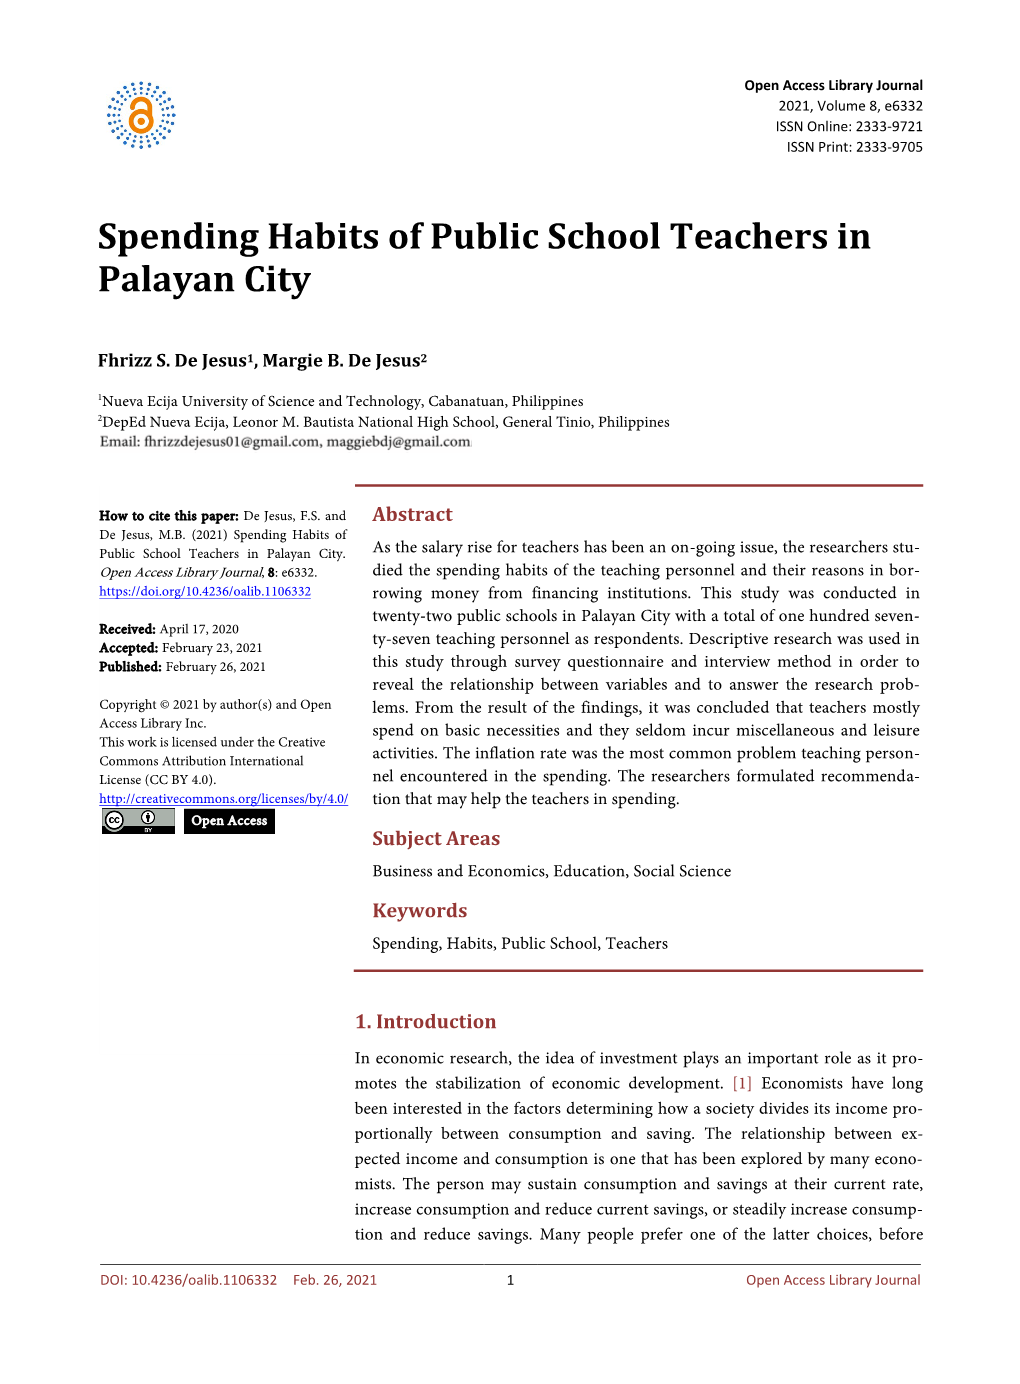 Spending Habits of Public School Teachers in Palayan City